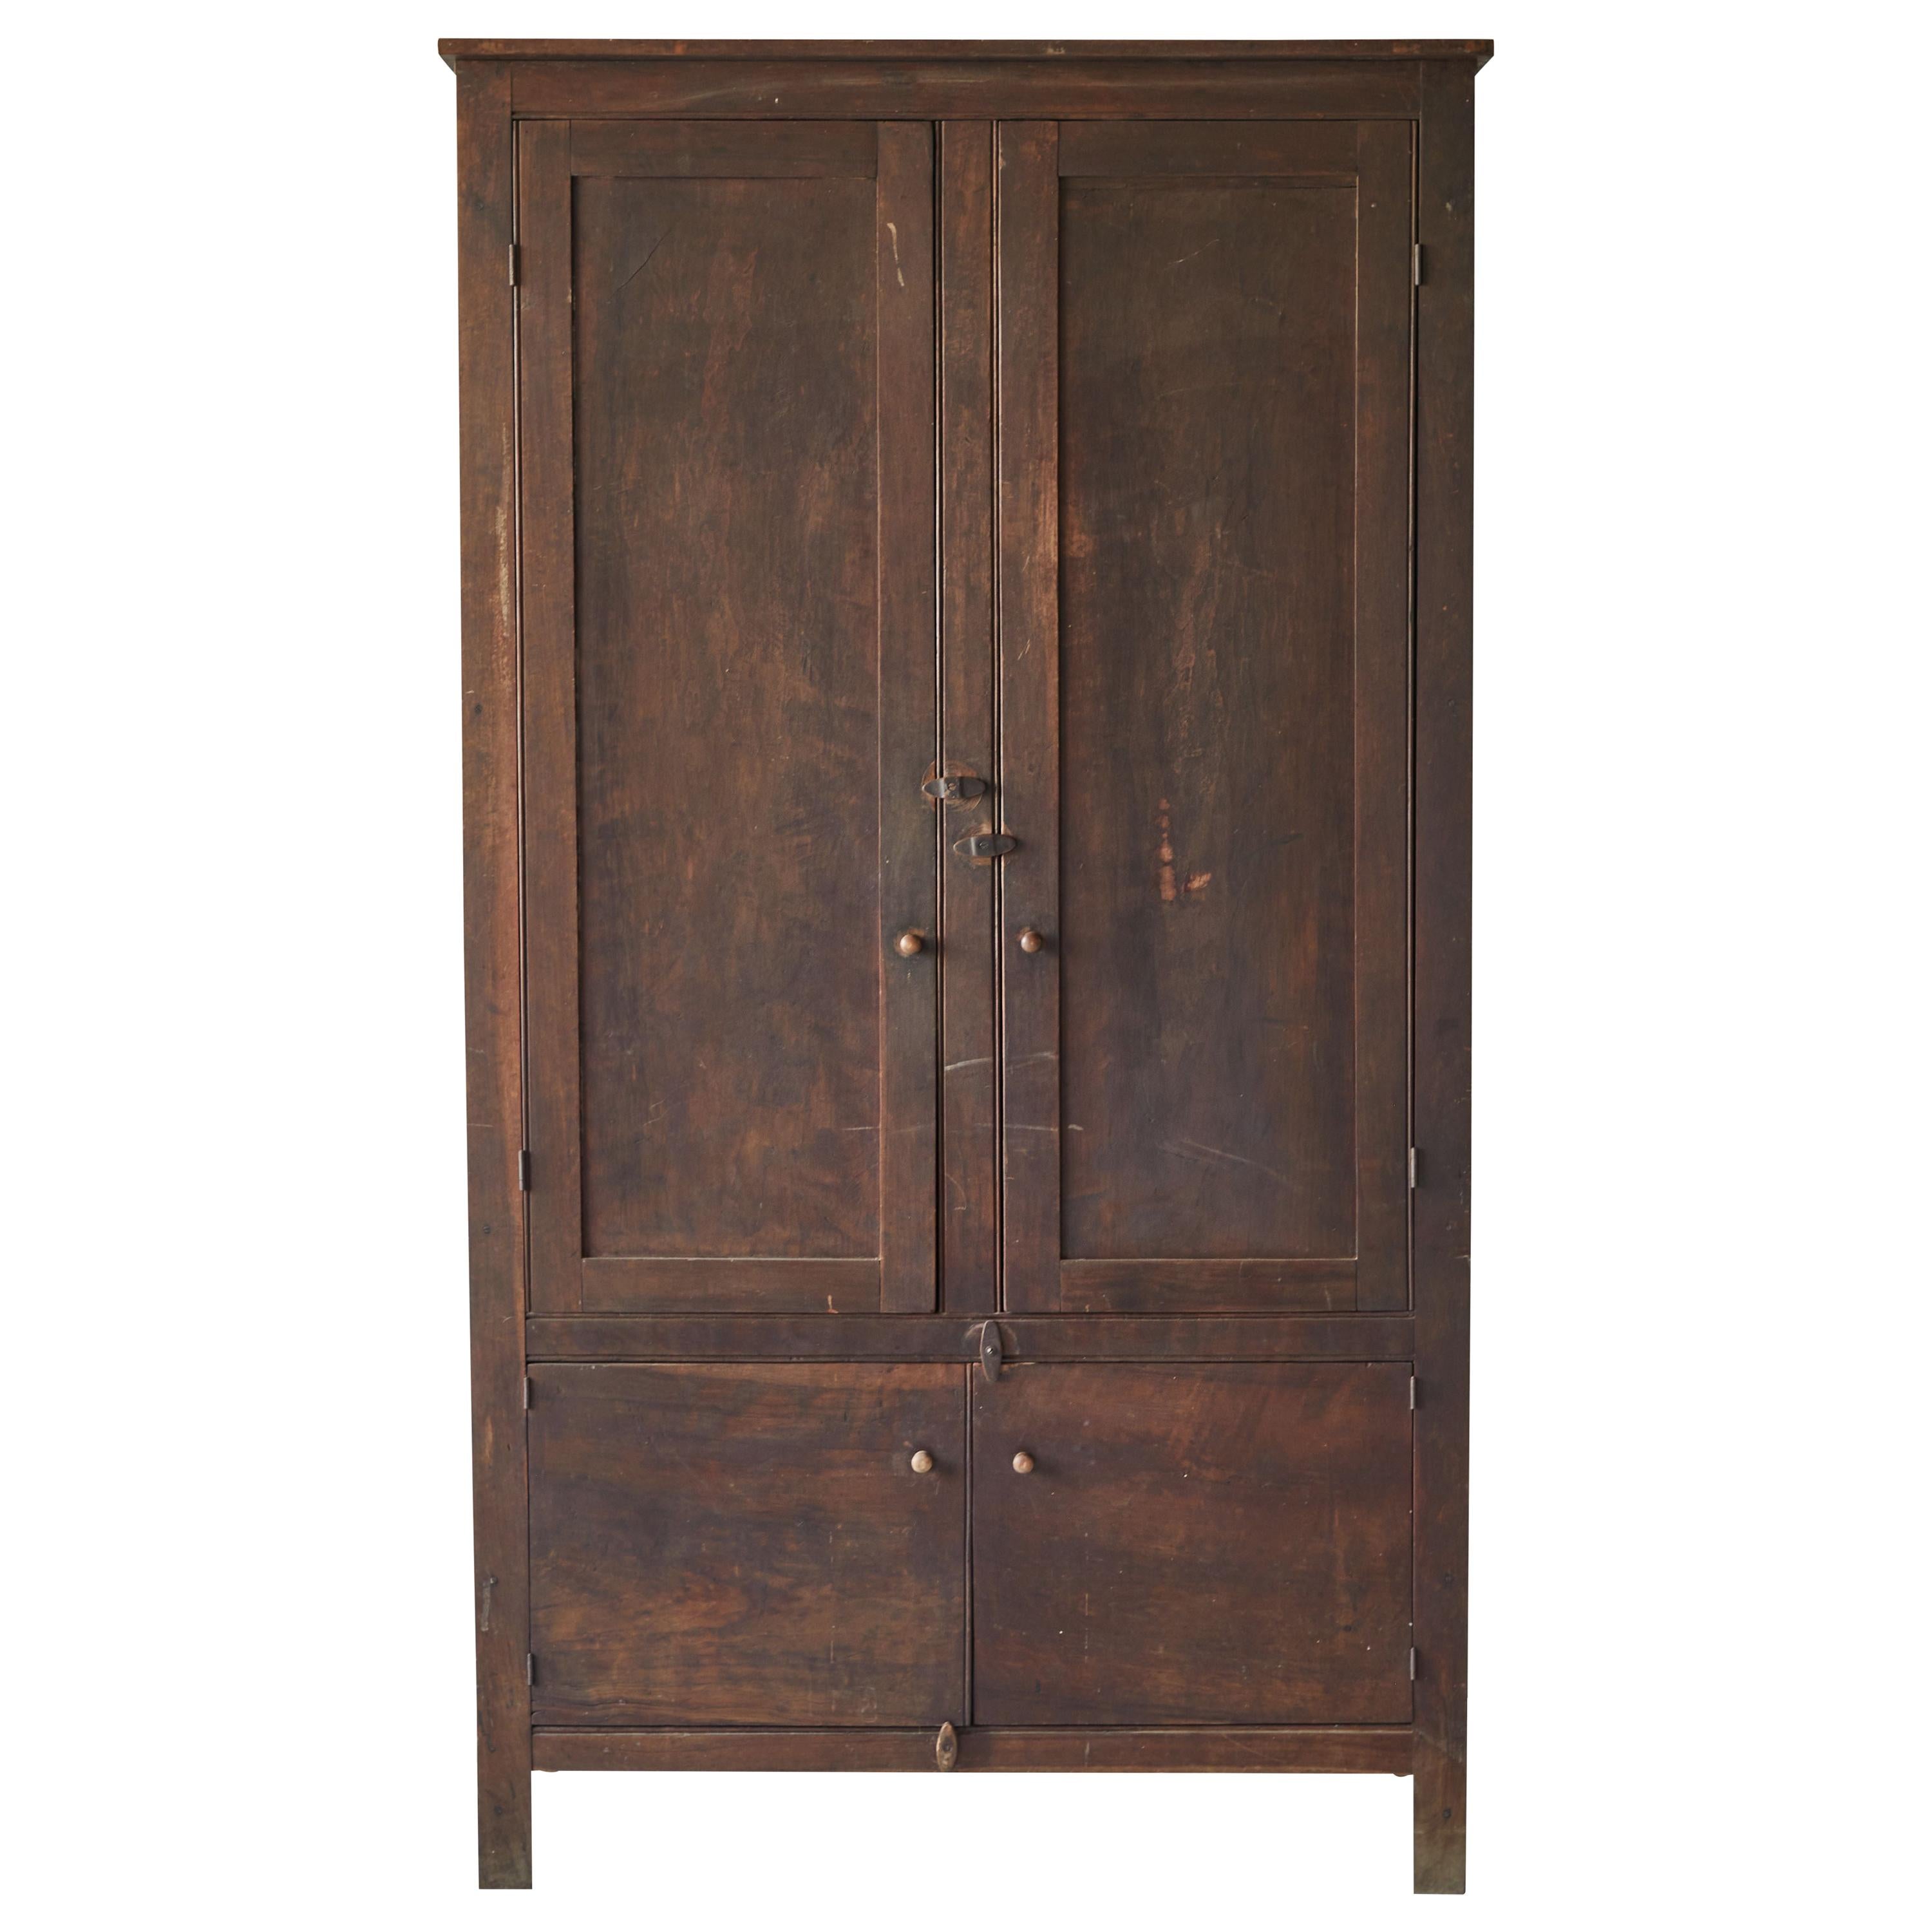 Early American Rustic Wardrobe Cabinet